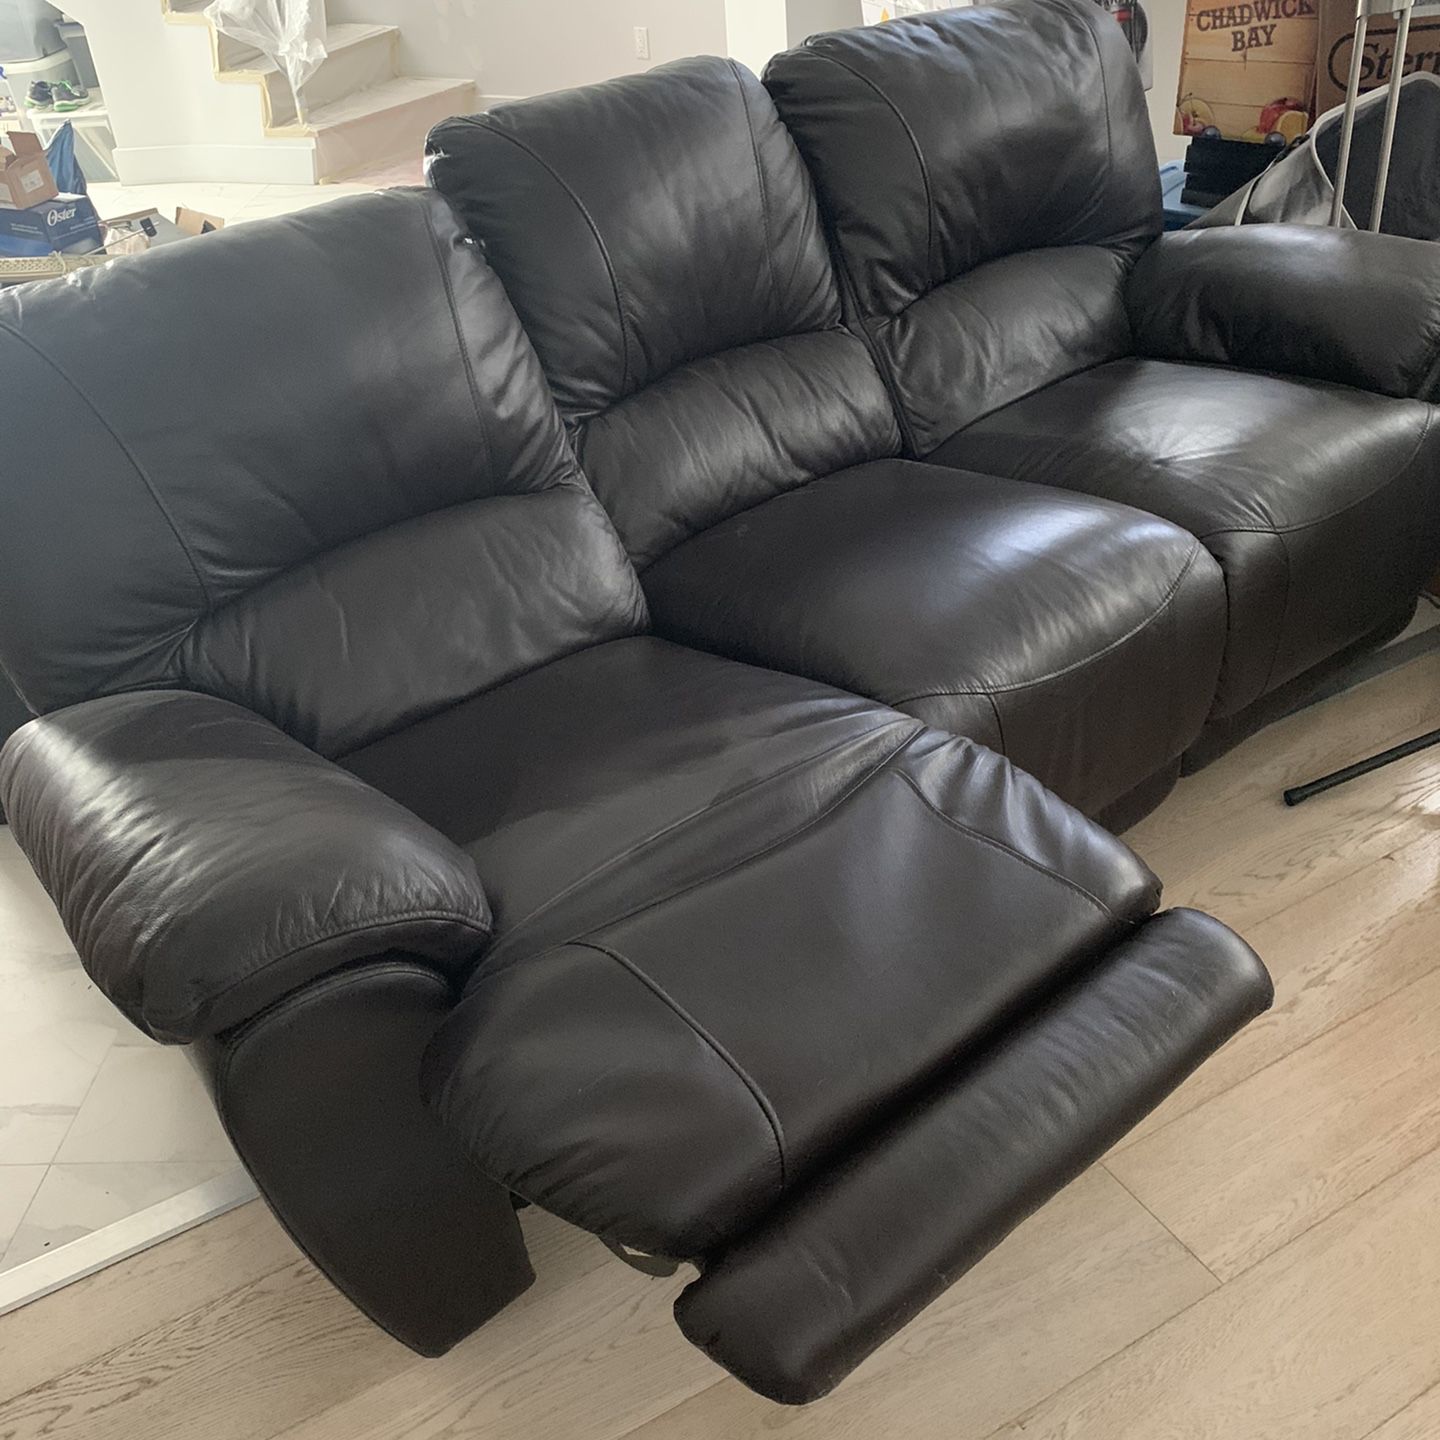 Dual Reclining Leather Sofa $150.00